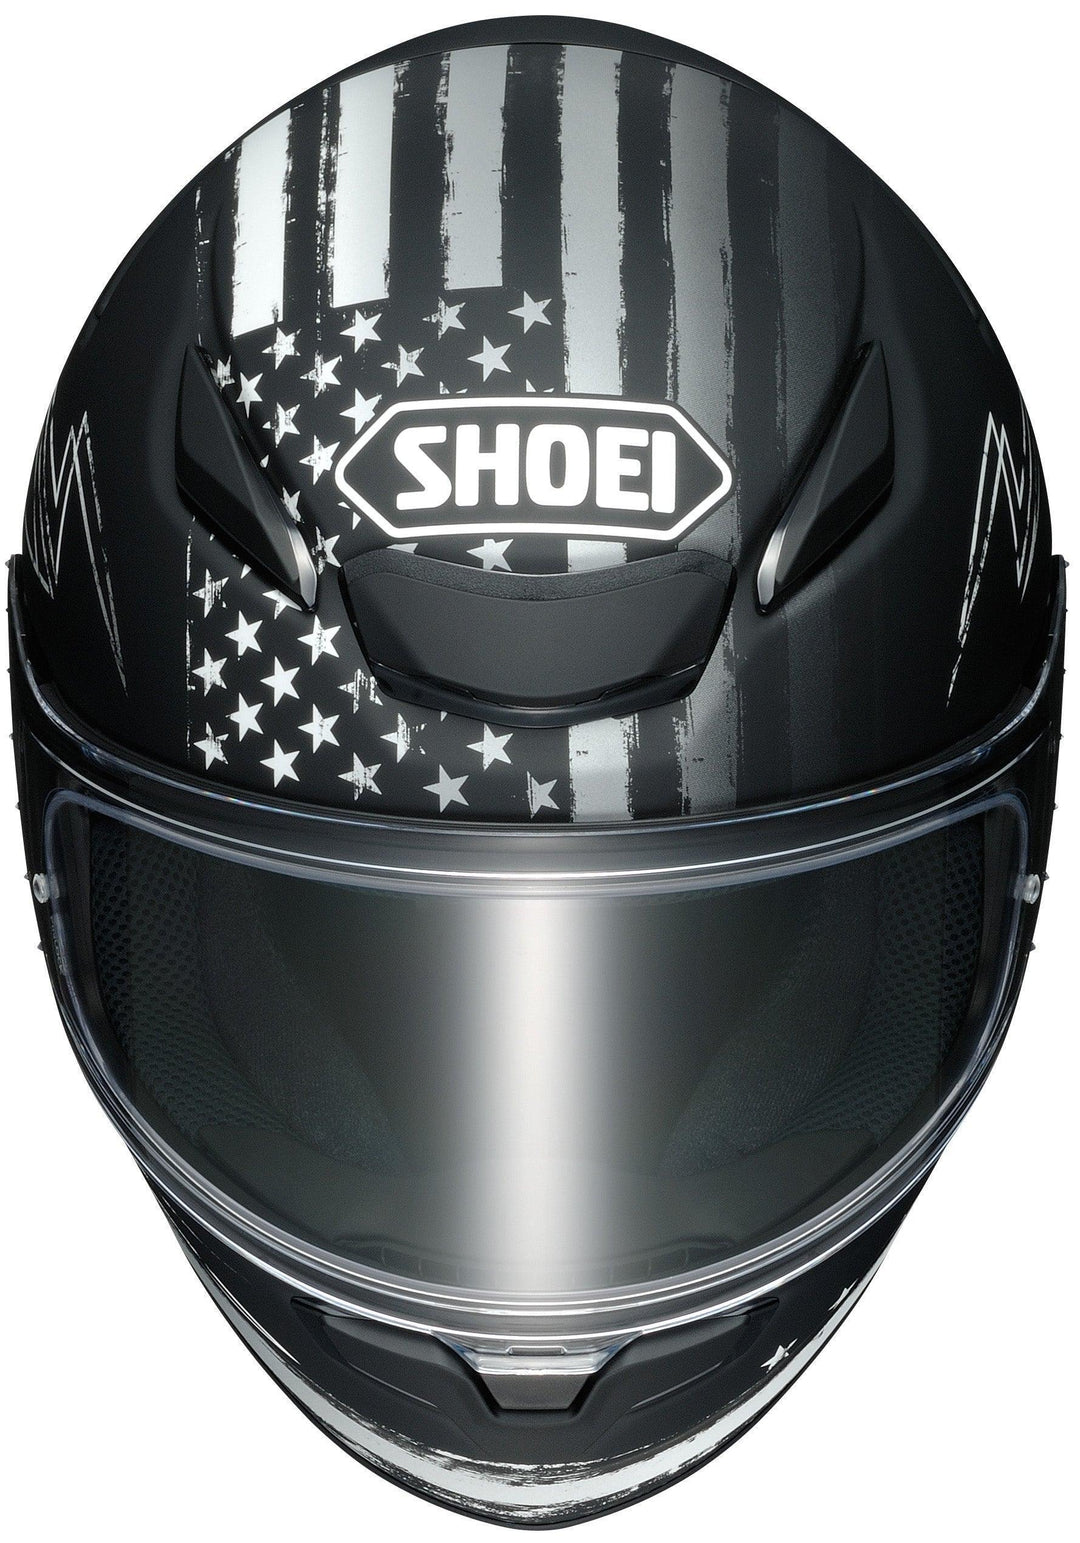 Shoei RF-1400 Dedicated 2 Helmet Matte TC-5 Black/White - Size XL - OPEN BOX - Motor Psycho Sport